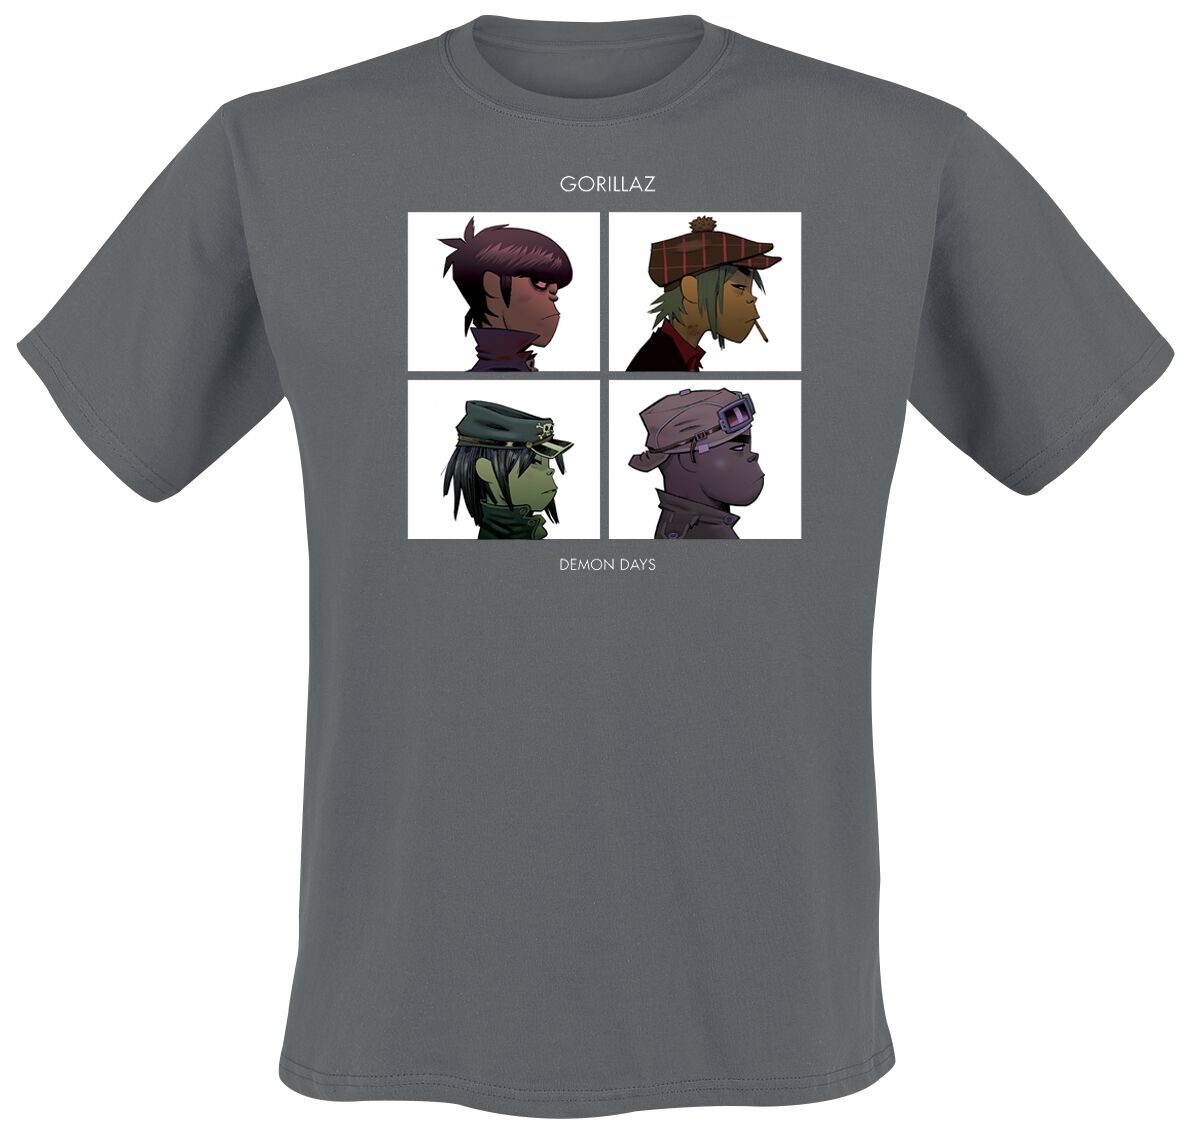 Gorillaz Dark Demon Days T-Shirt charcoal